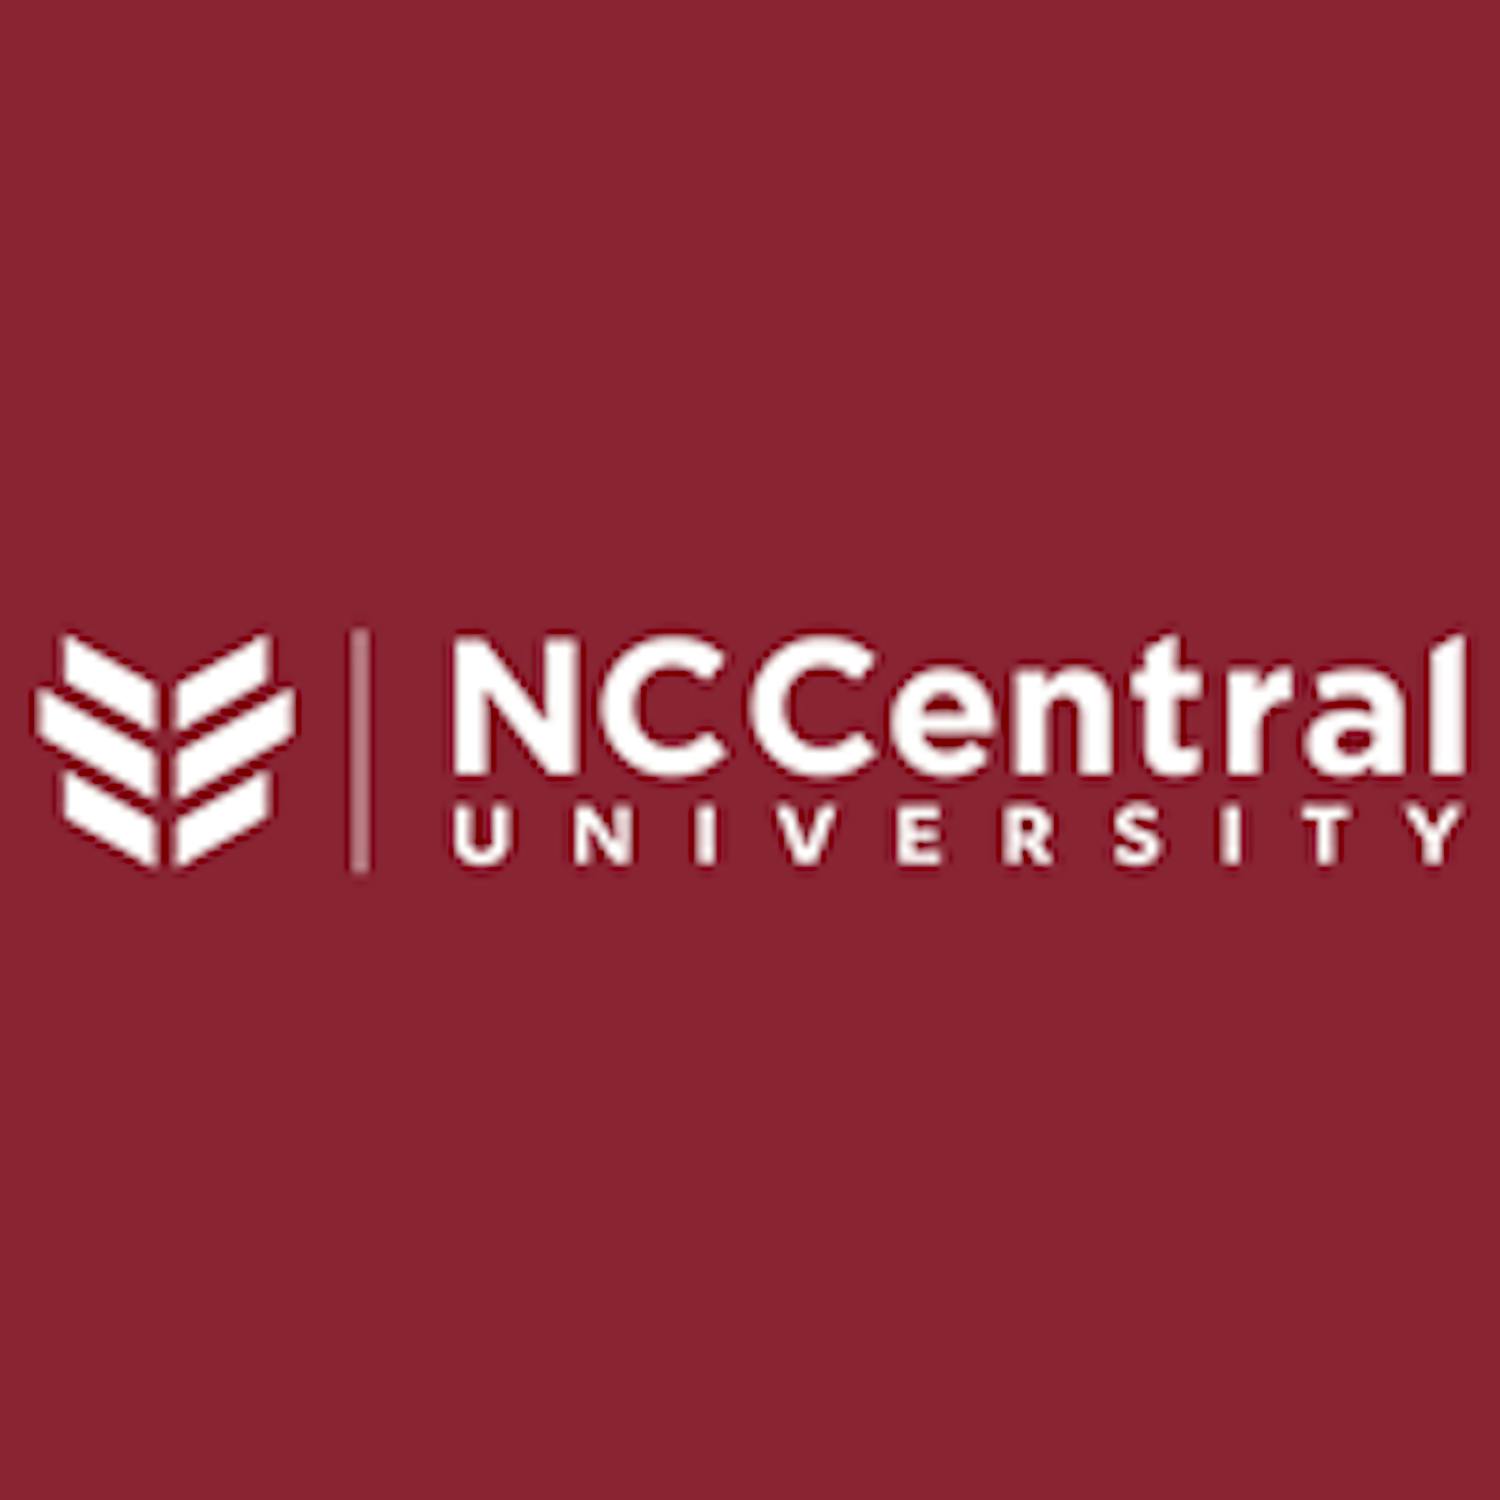 North Carolina Central University